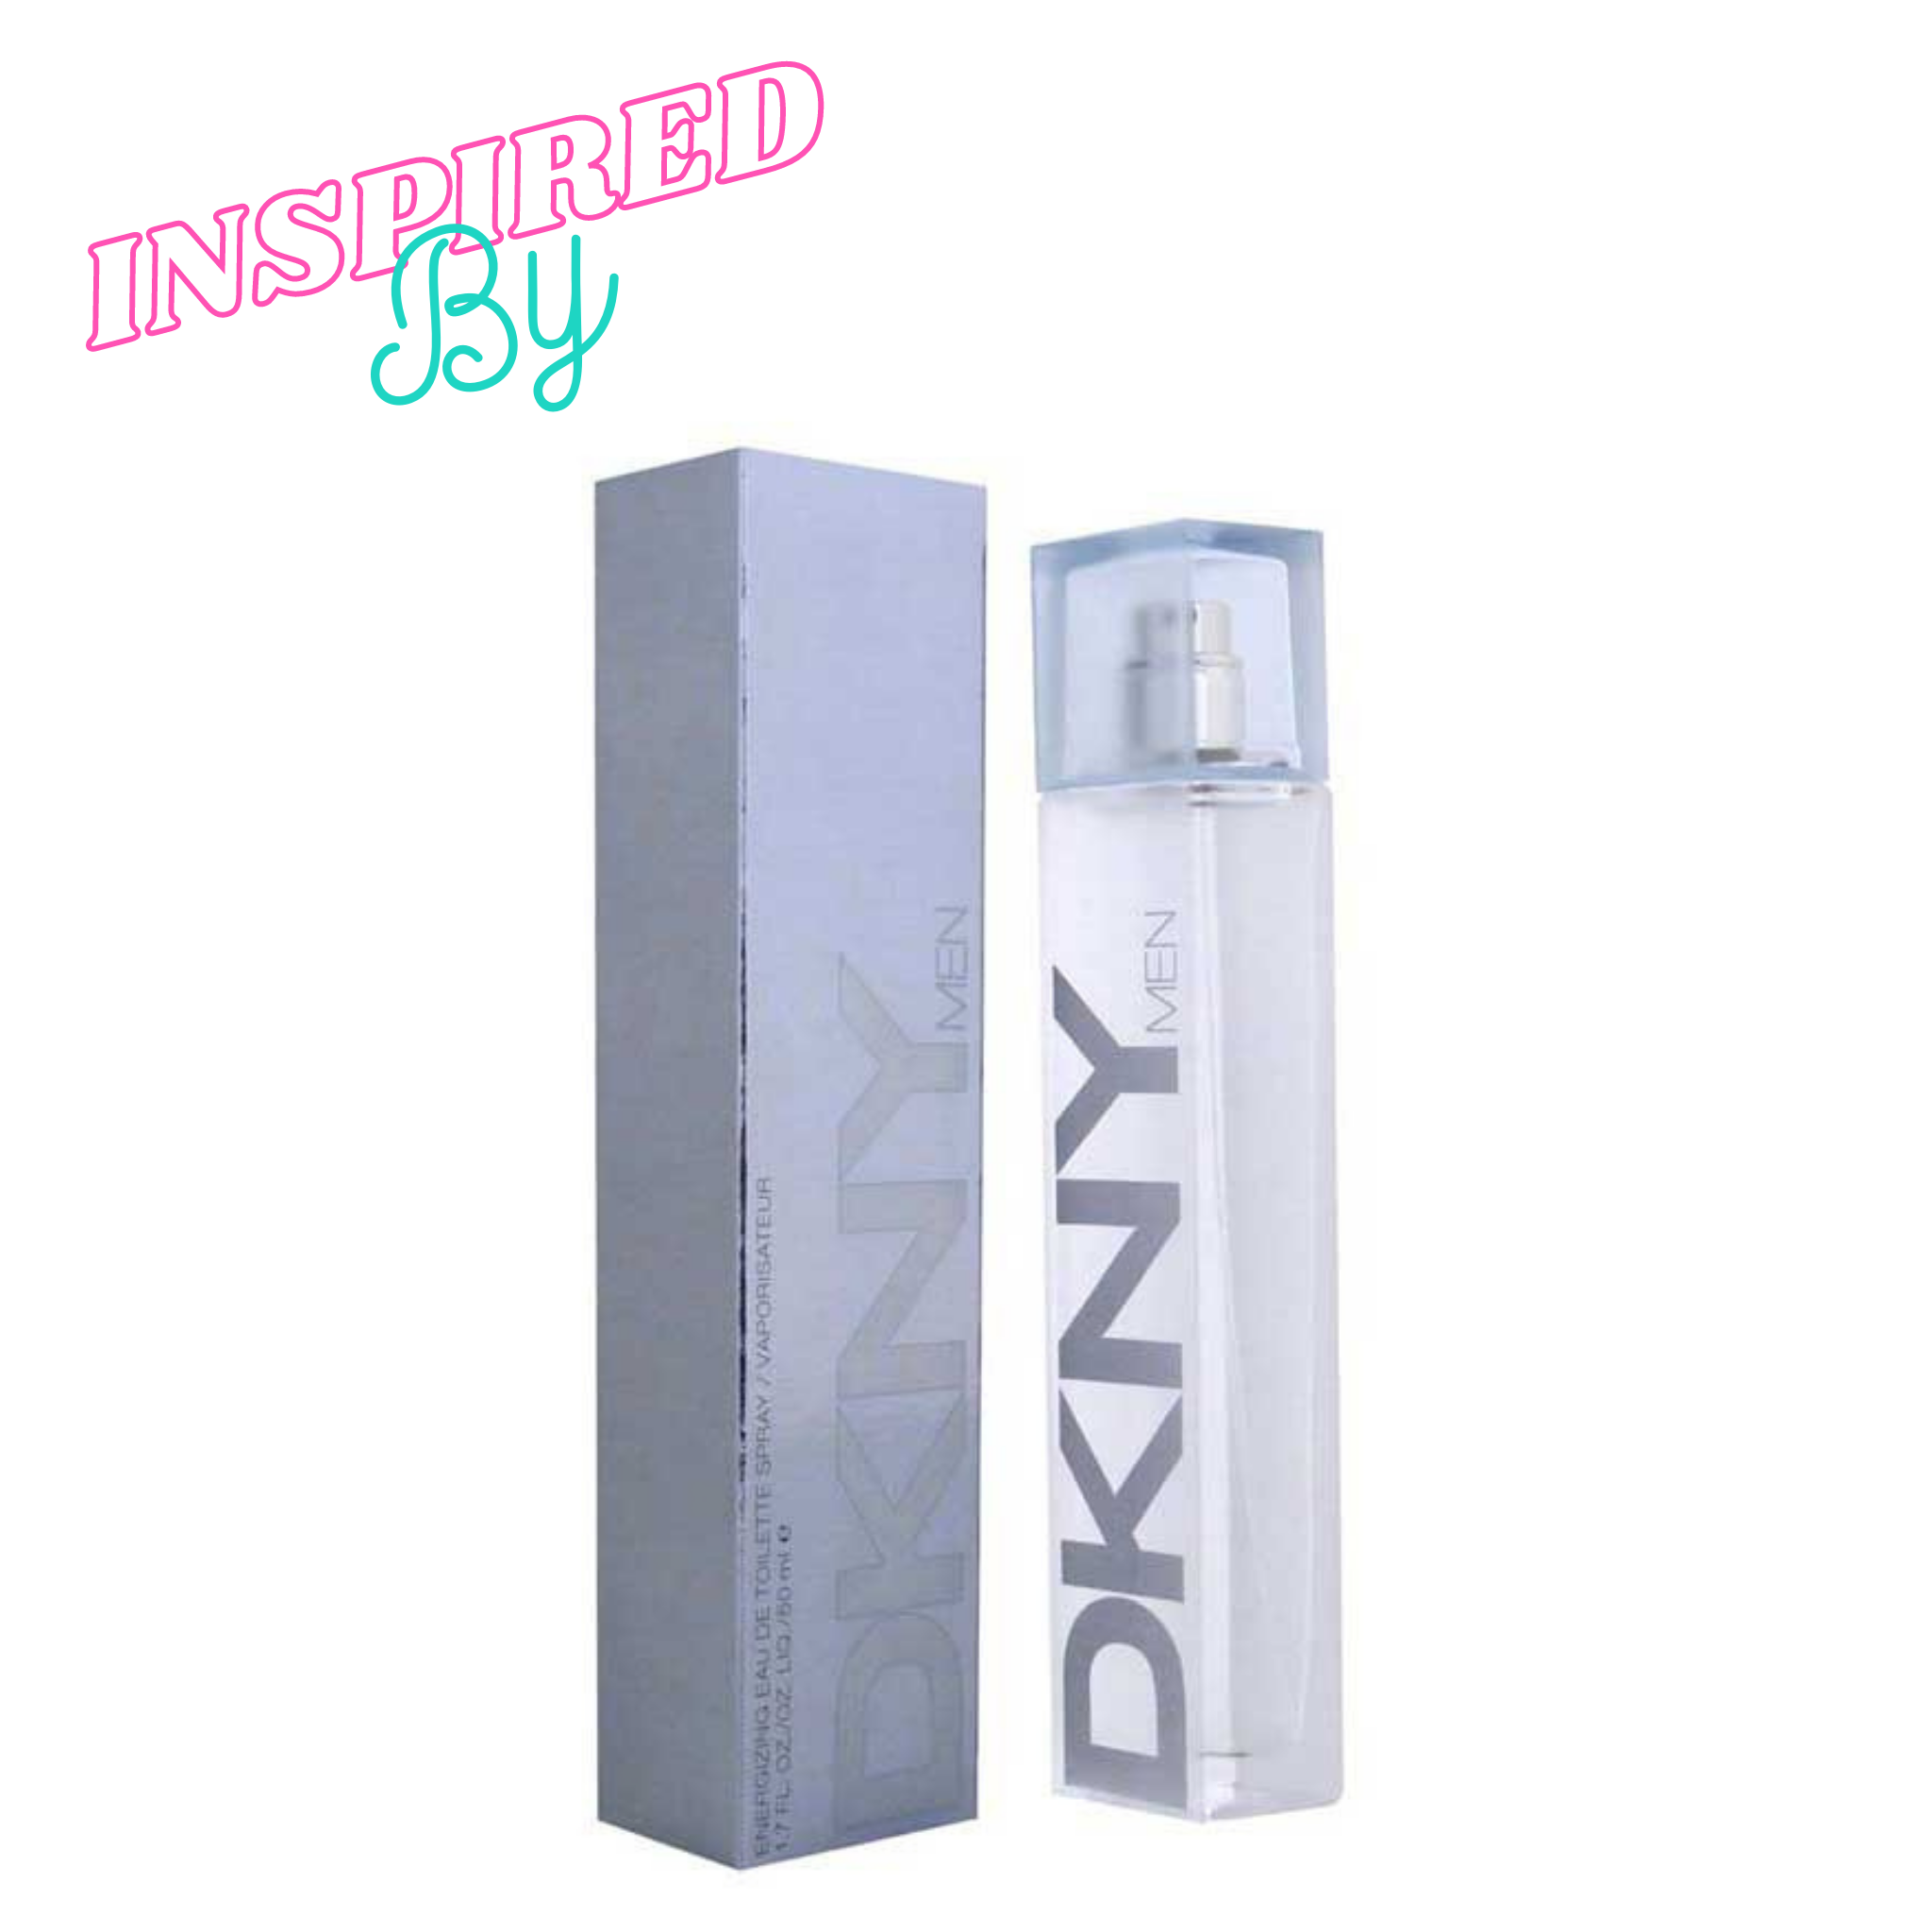 Inspired by DKNY Men 100ml - Fragrance Deliver SA